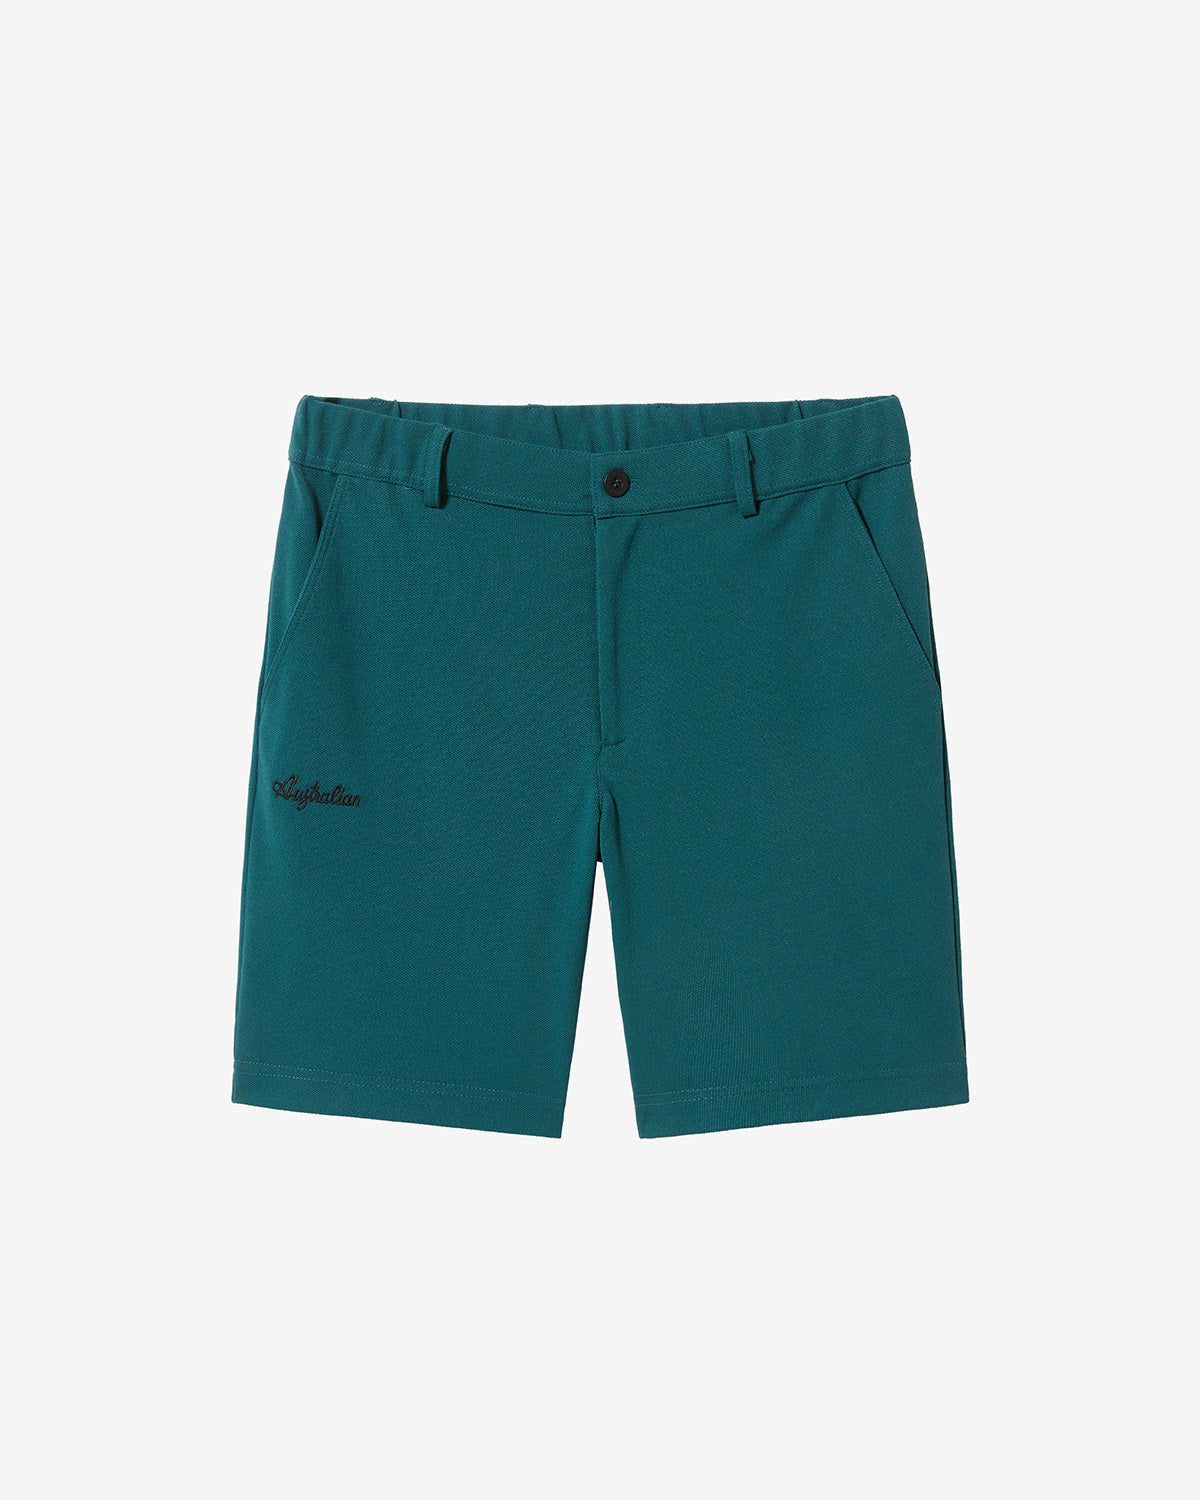 Club Shorts: Australian Sportswear